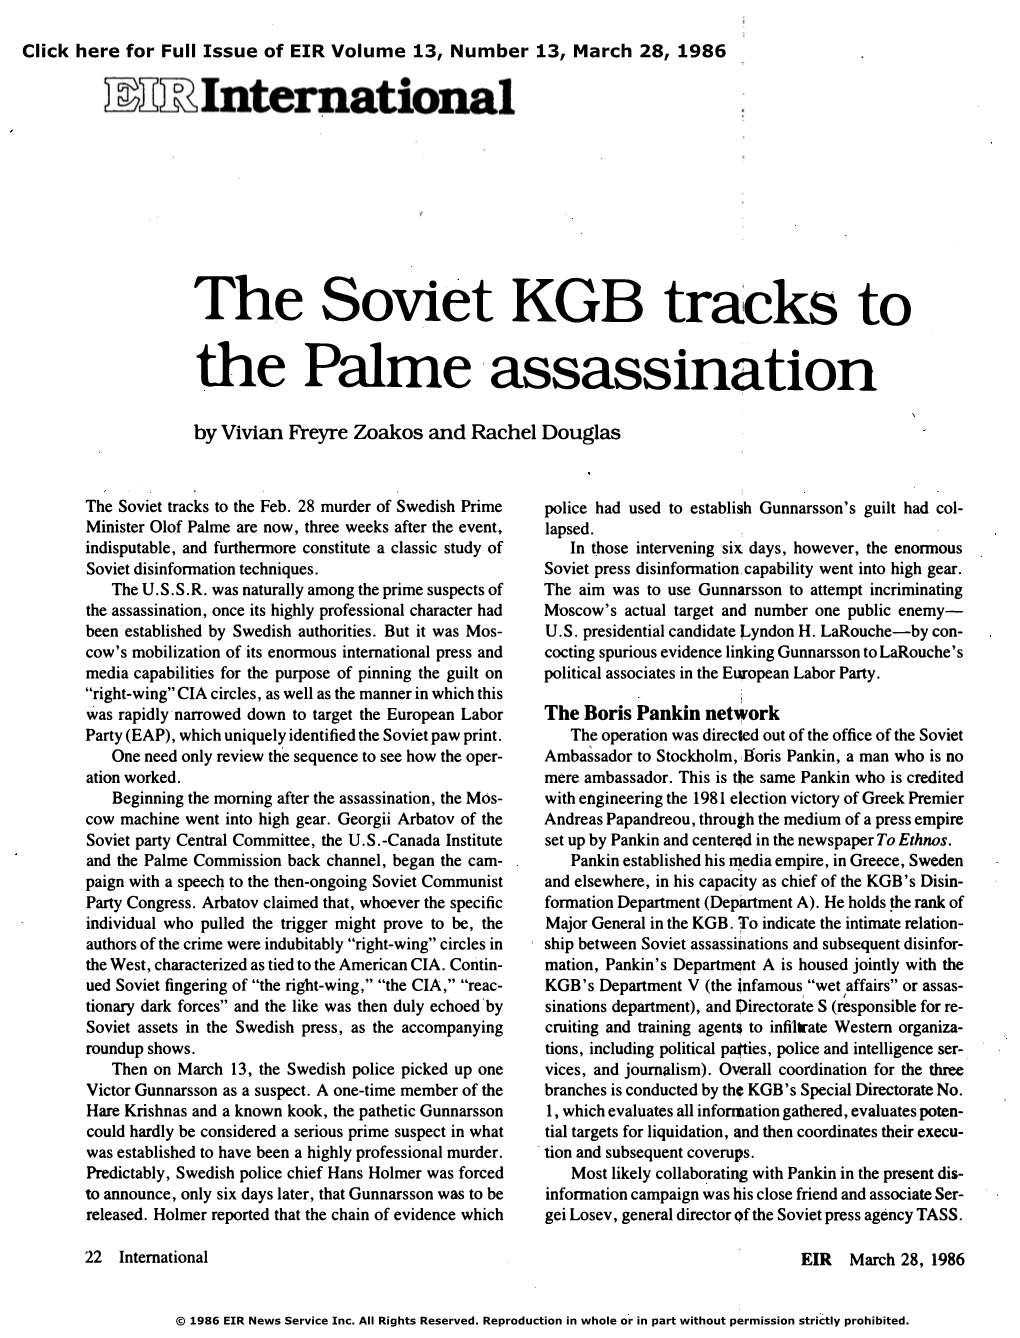 The Soviet KGB Tracks to the Palme Assassination